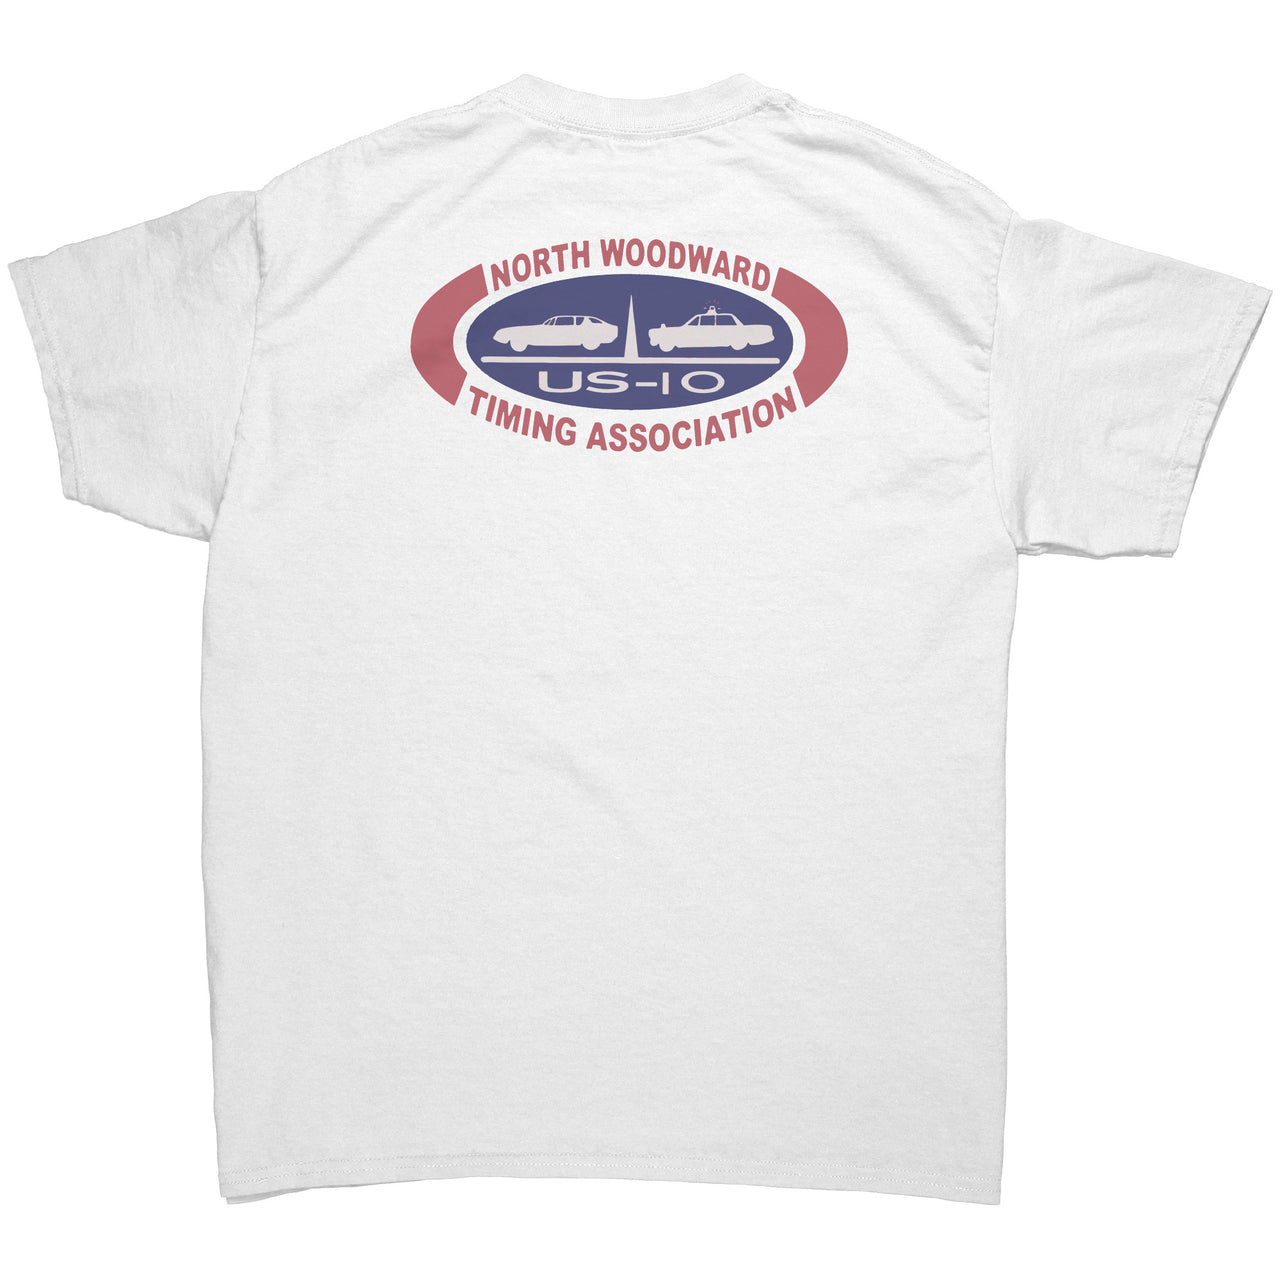 * North Woodward Timing Association T-Shirt